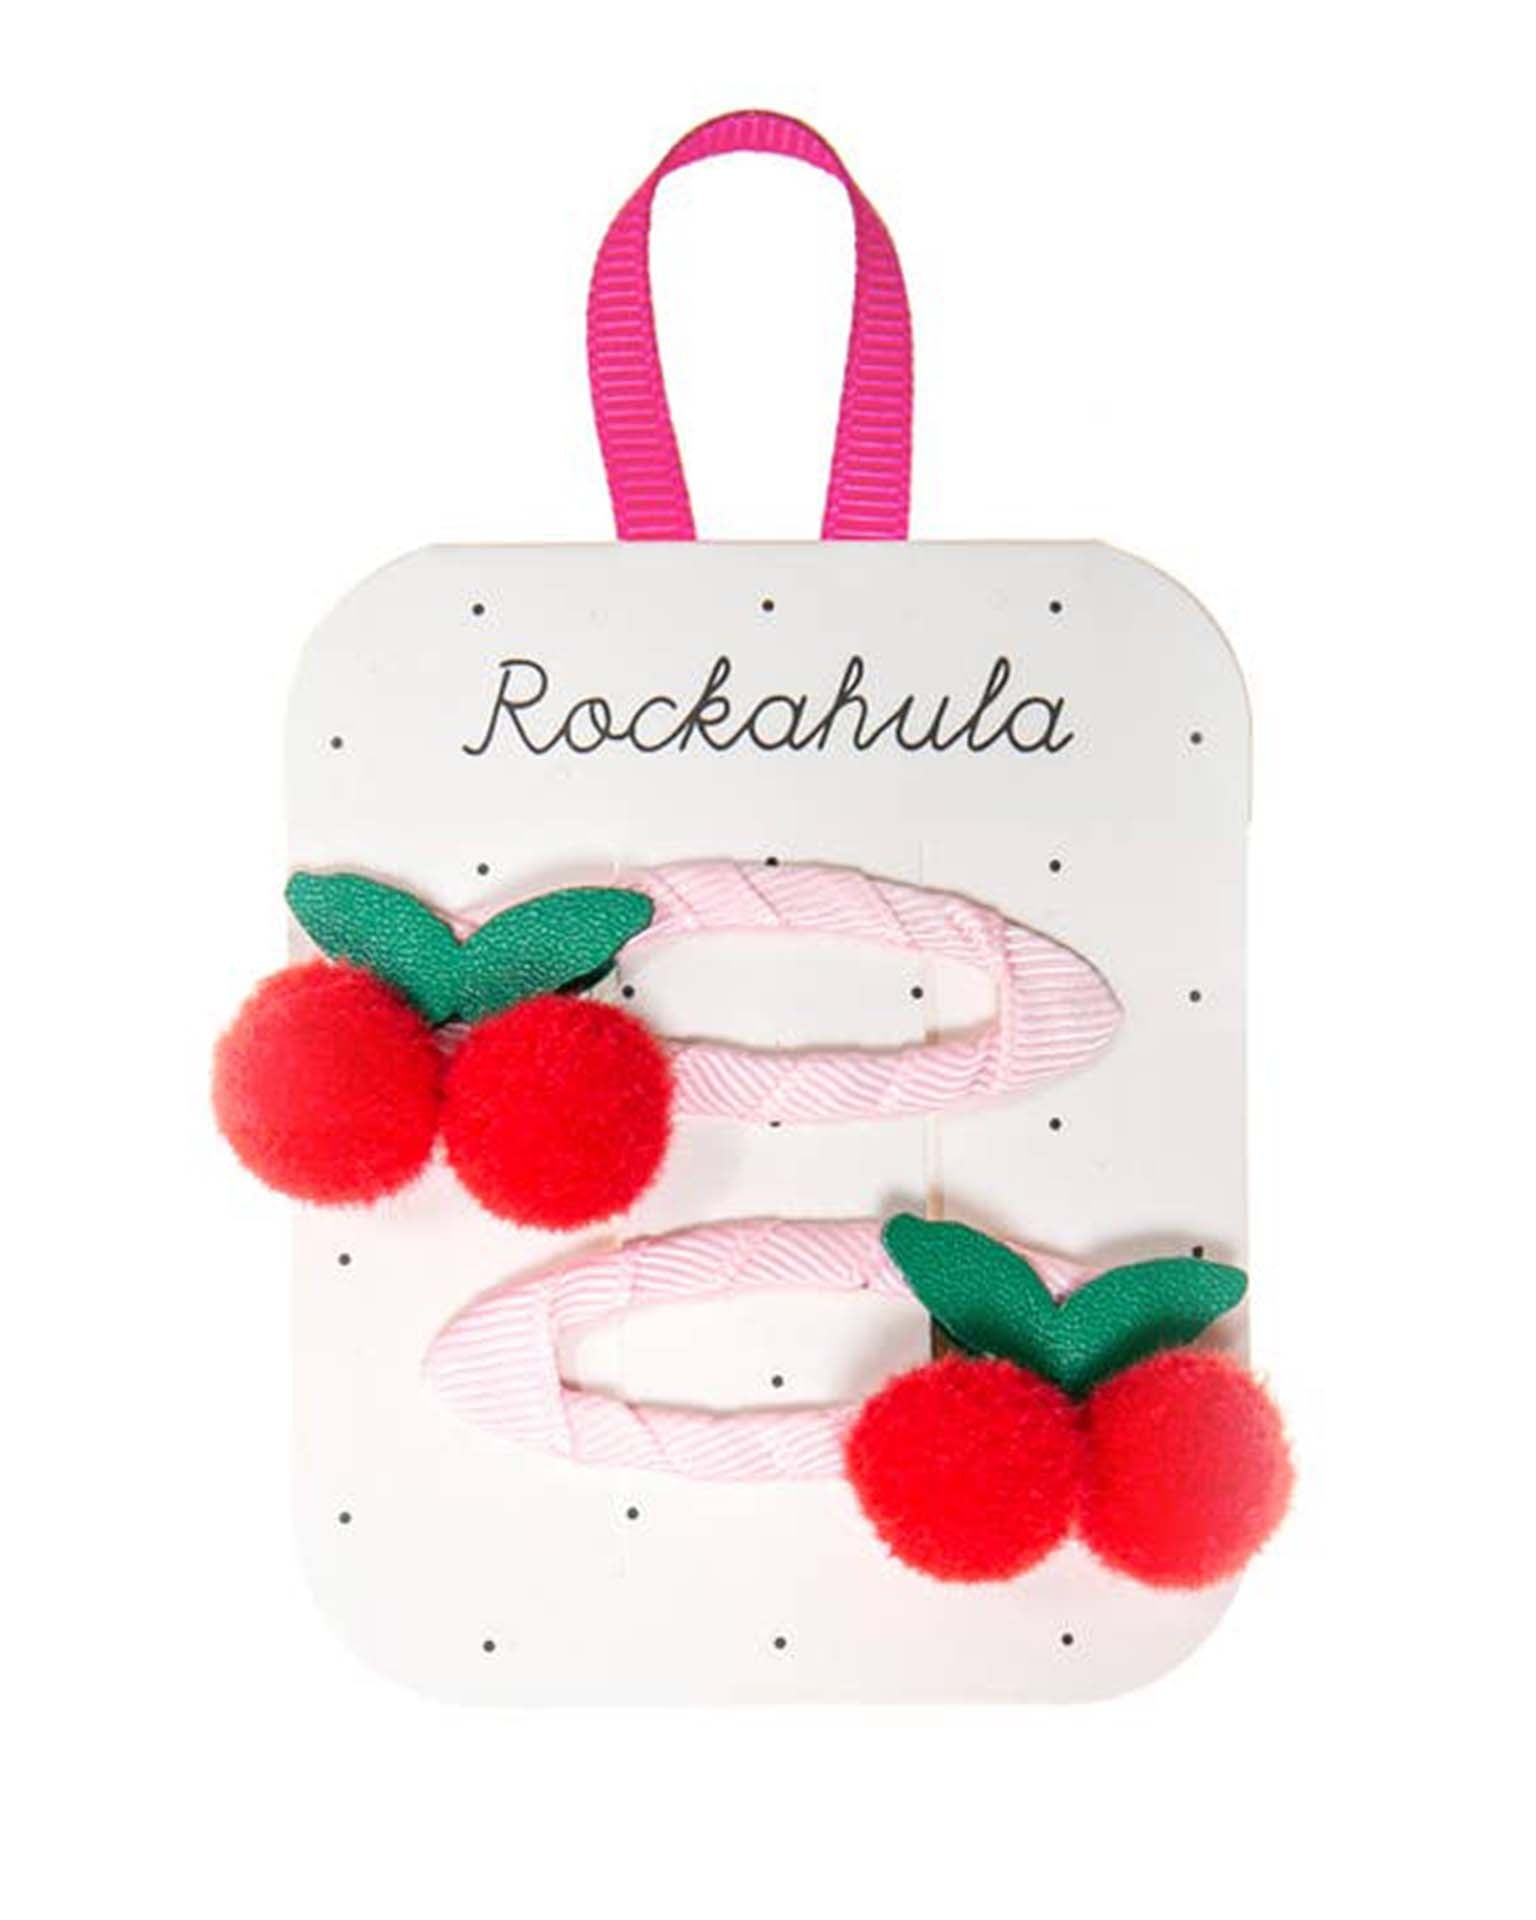 Little rockahula kids accessories sweet cherry pom pom clips